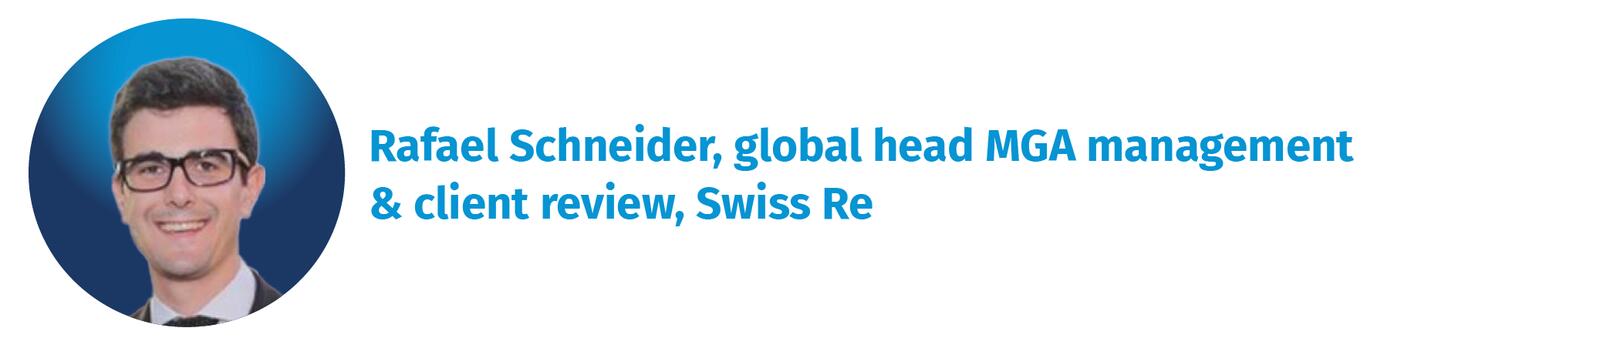 Rafael Schneider, global head MGA management & client review, Swiss Re